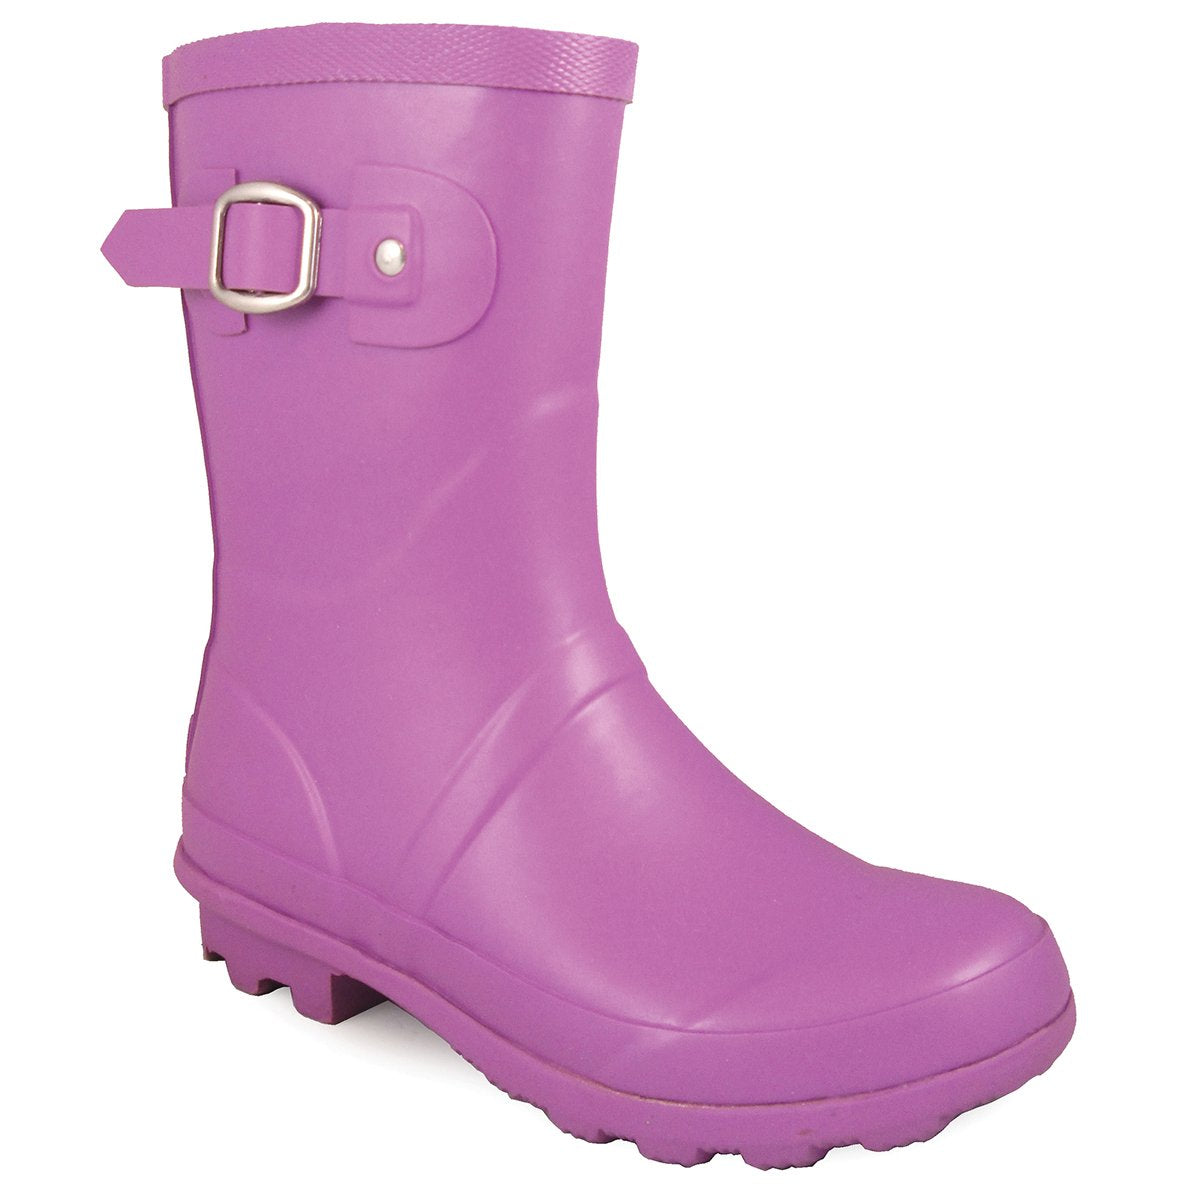 Smoky Mountain Girl's Children's Purple Rubber Boot